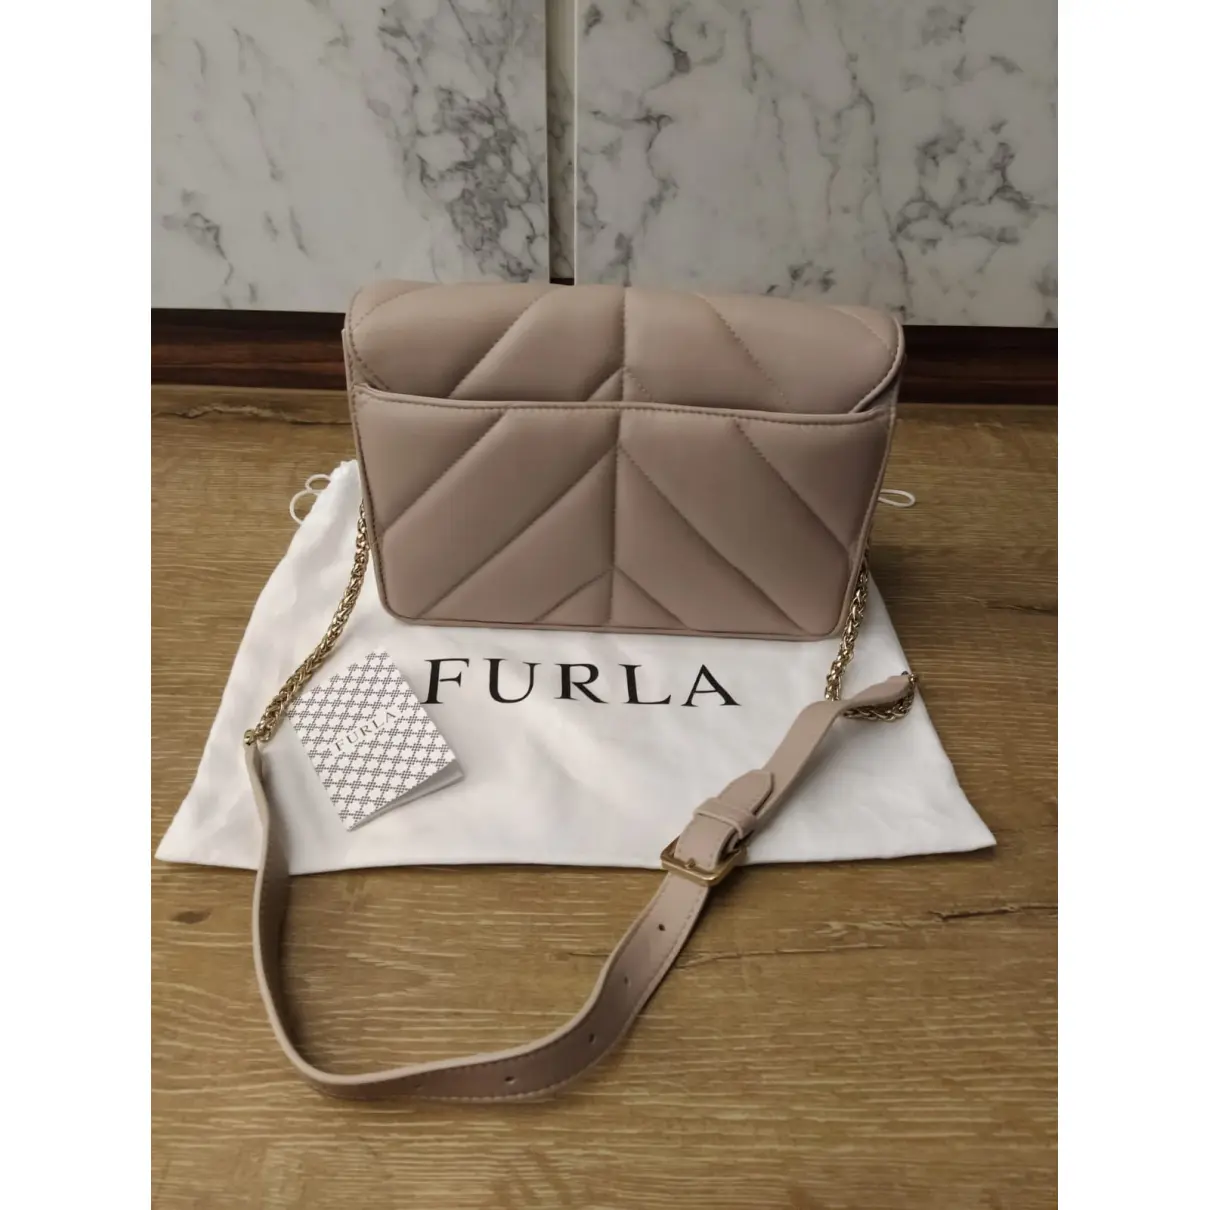 Buy Furla Metropolis leather handbag online